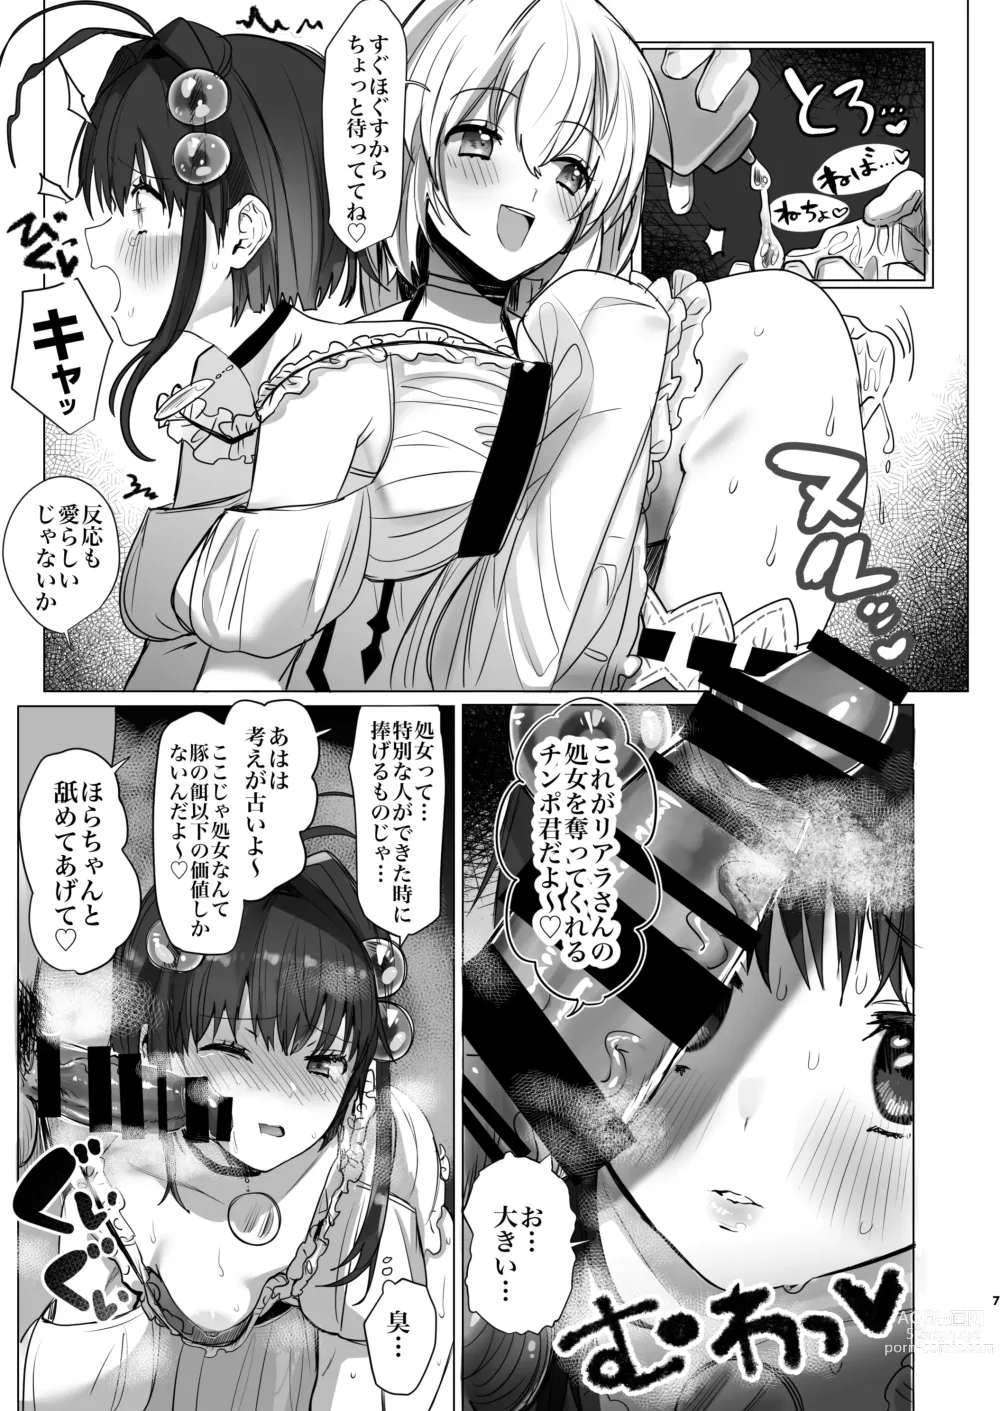 Page 7 of doujinshi Eiyuu wa kou sagase